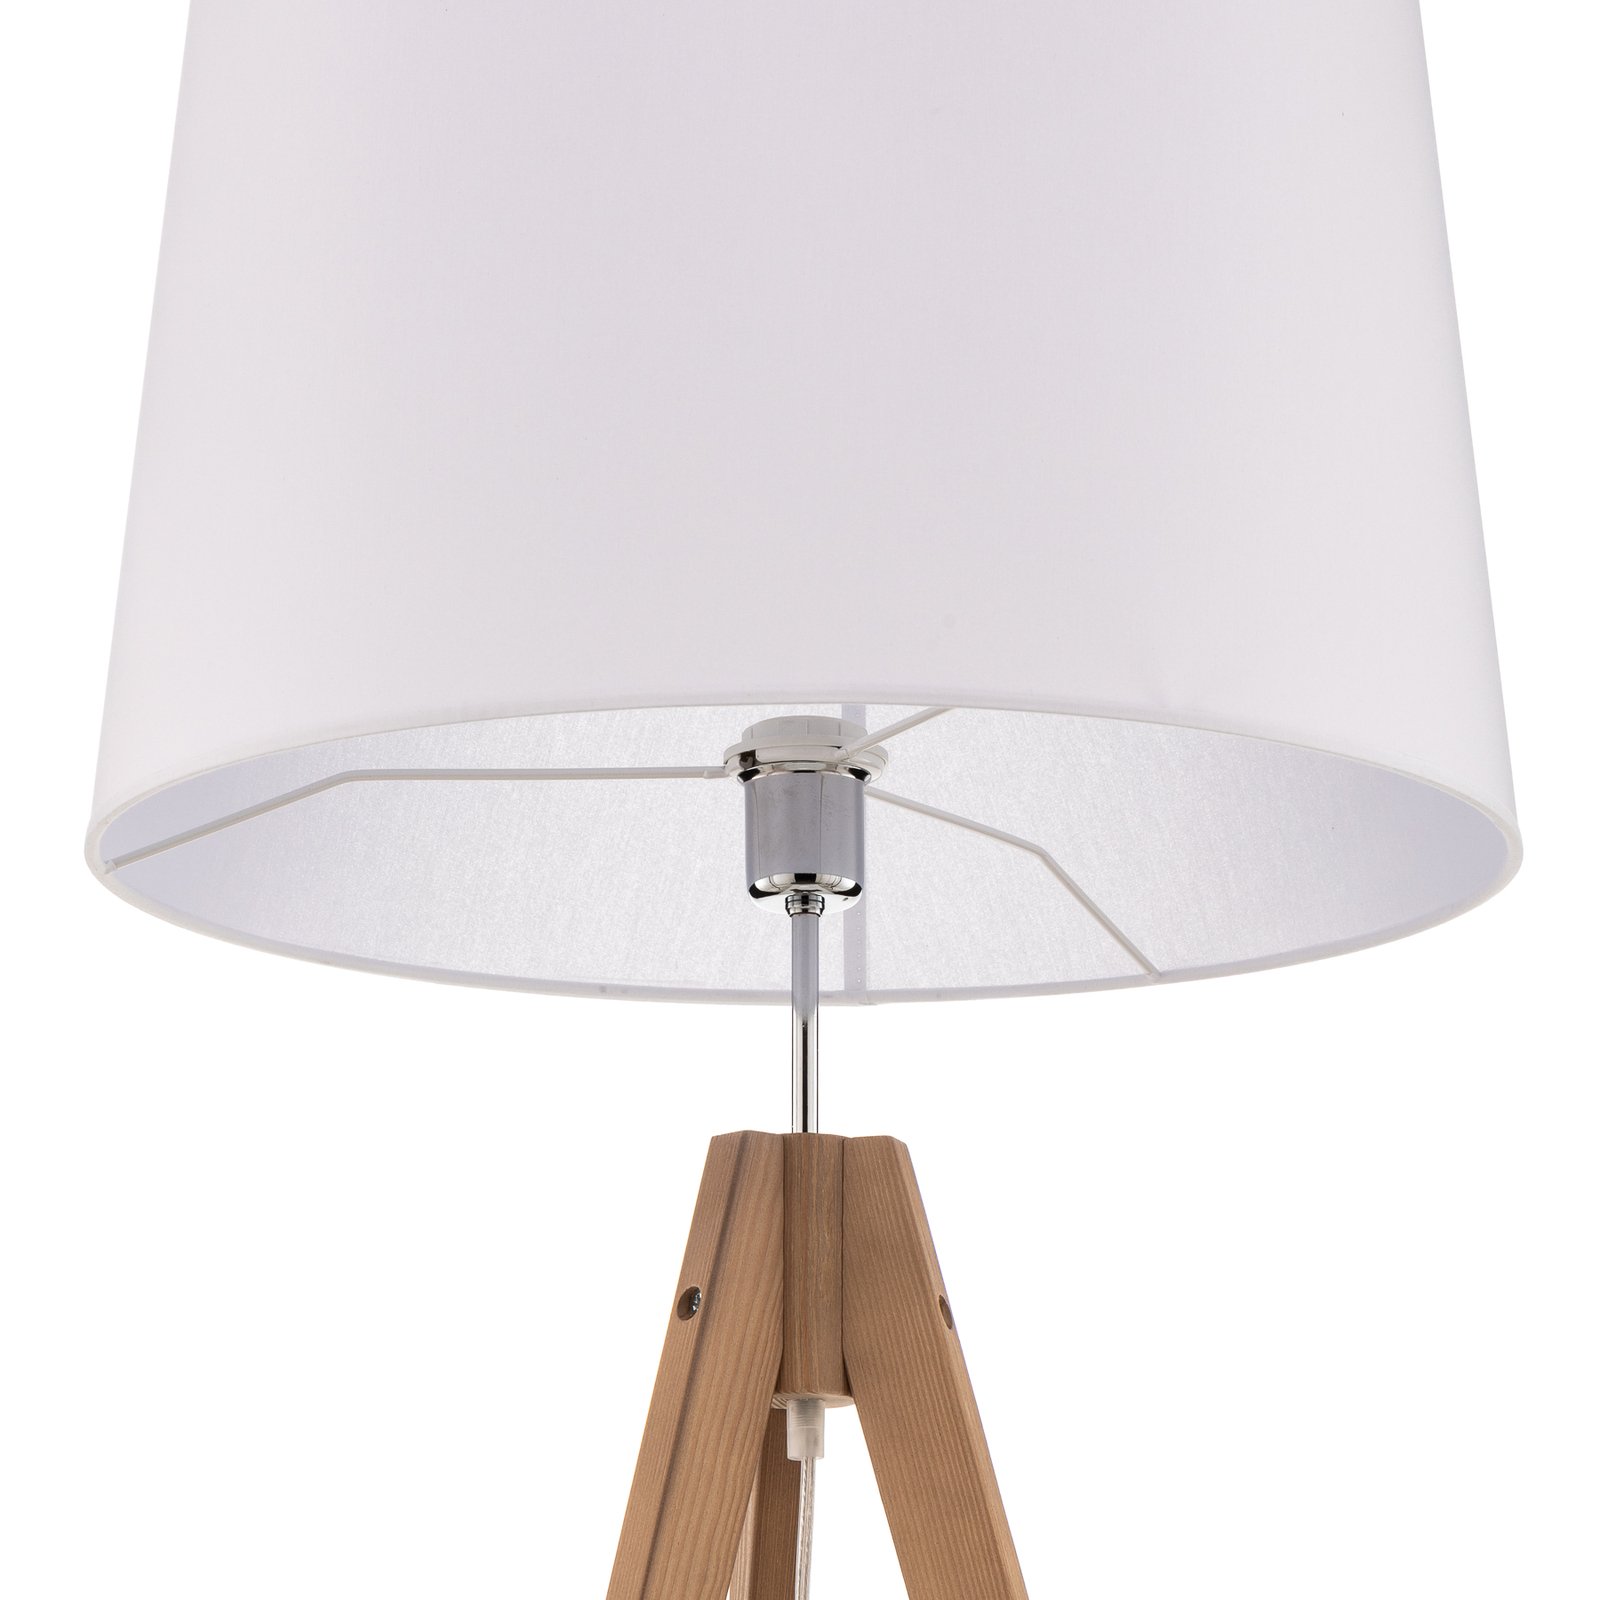 Walz floor lamp, tripod frame, white lampshade